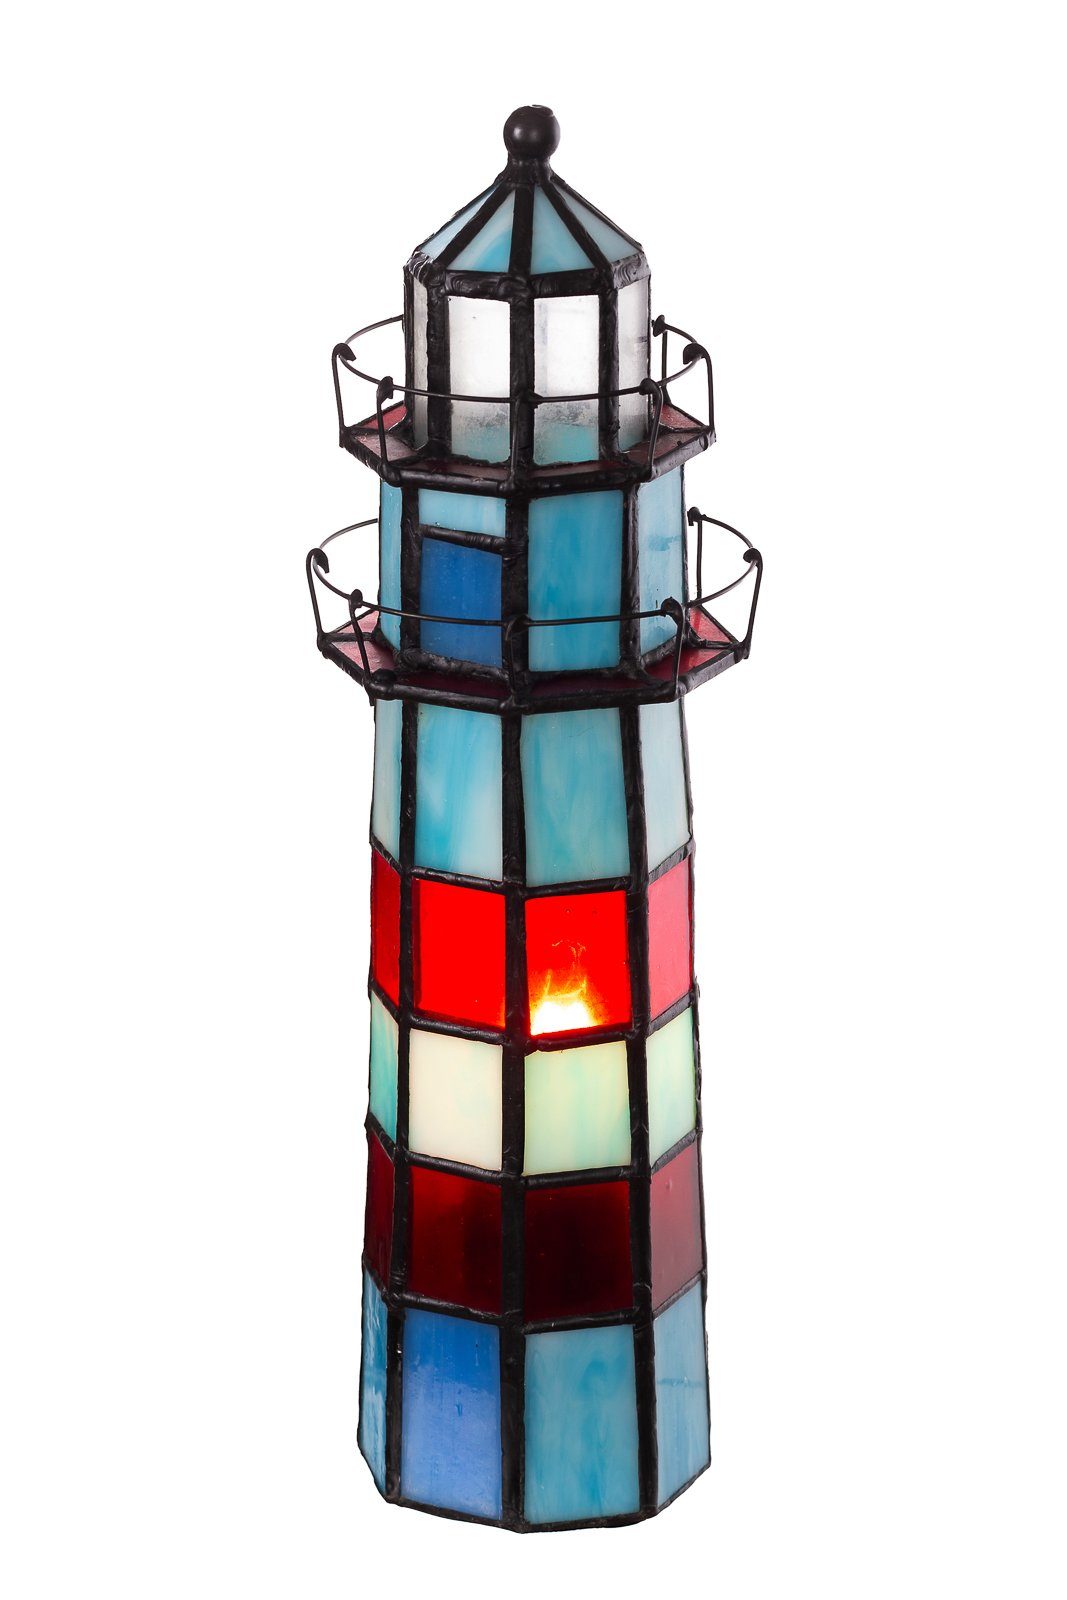 Tischlampe Style Tif164 Lampe Stehlampe Leuchtturm Birendy BIRENDY Tiffany Motiv